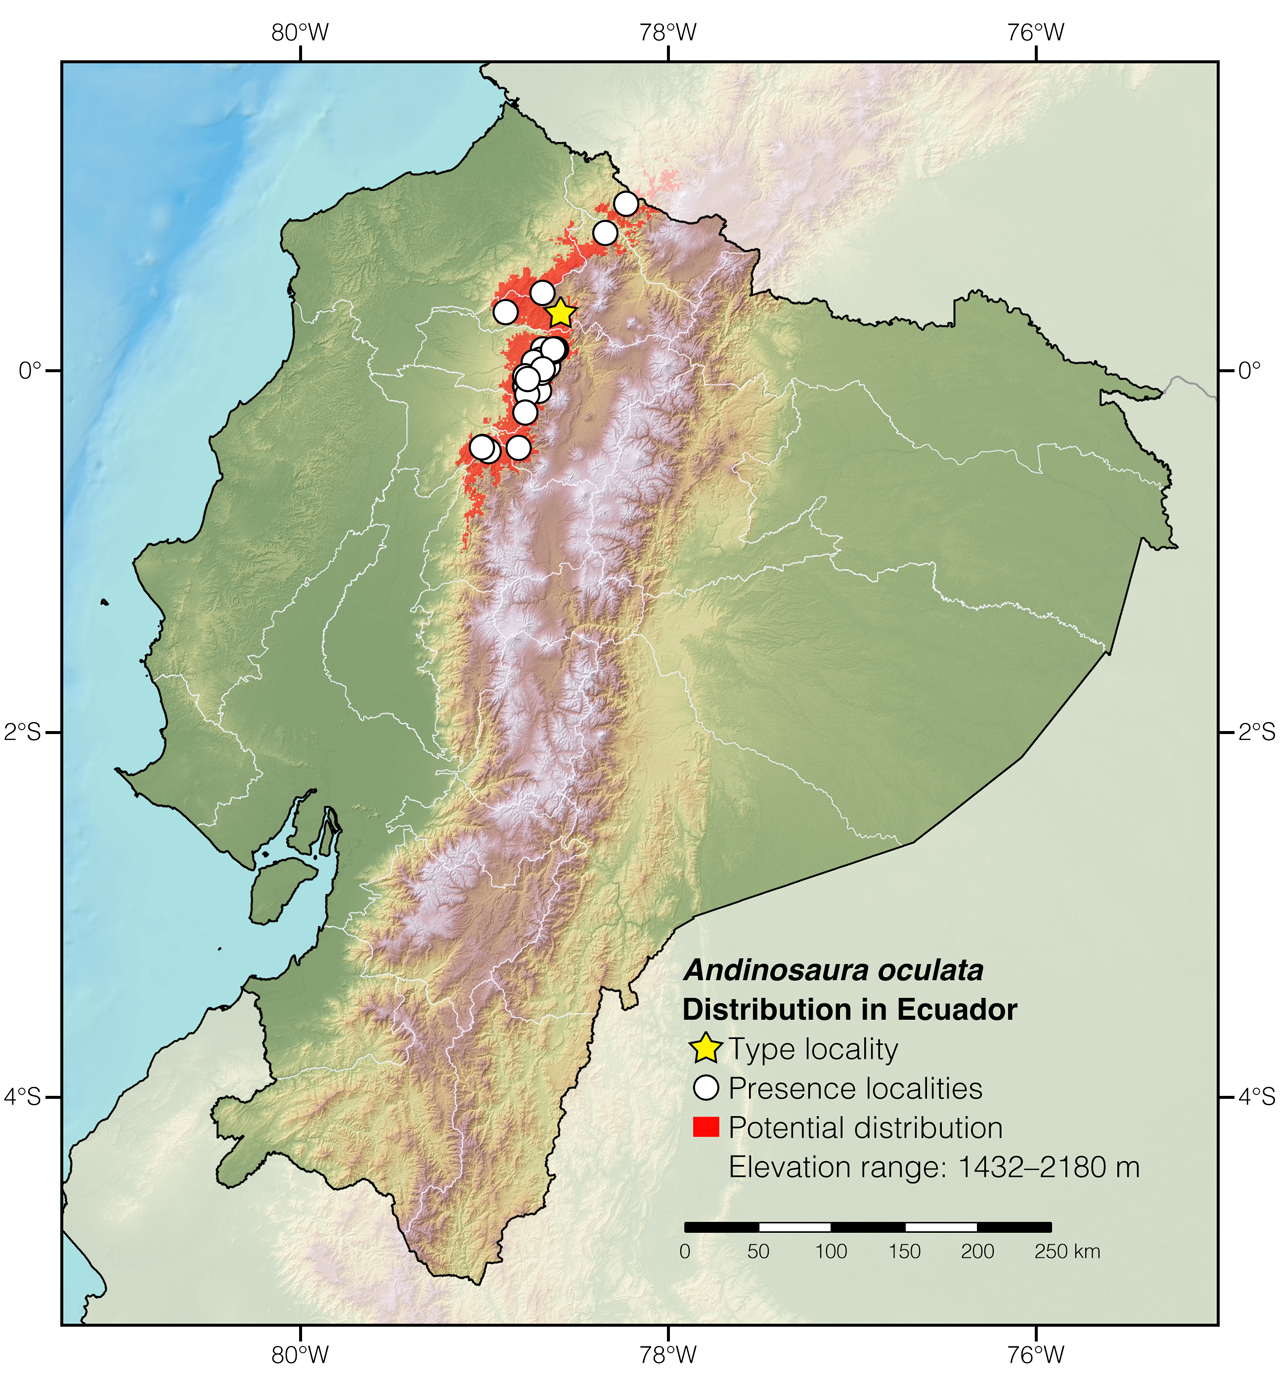 Distribution of Andinosaura oculata in Ecuador